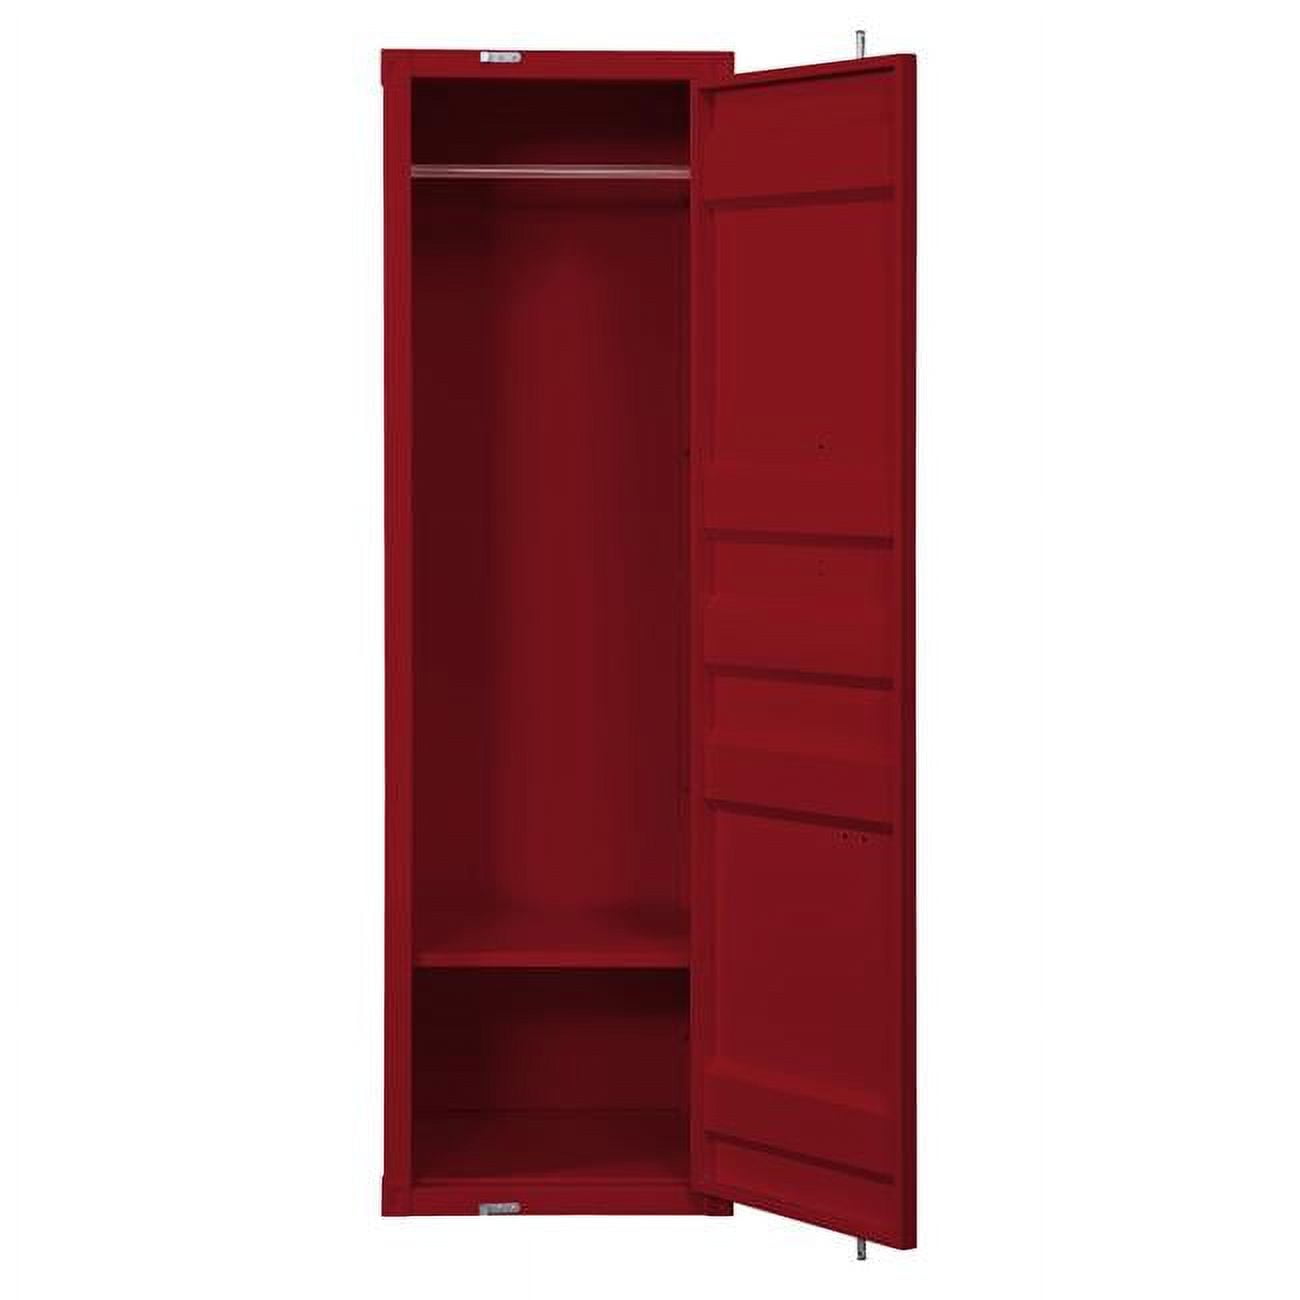 Picture of ACME Furniture 35955 20 x 22 x 67 in. Cargo Single Door Wardrobe, Red